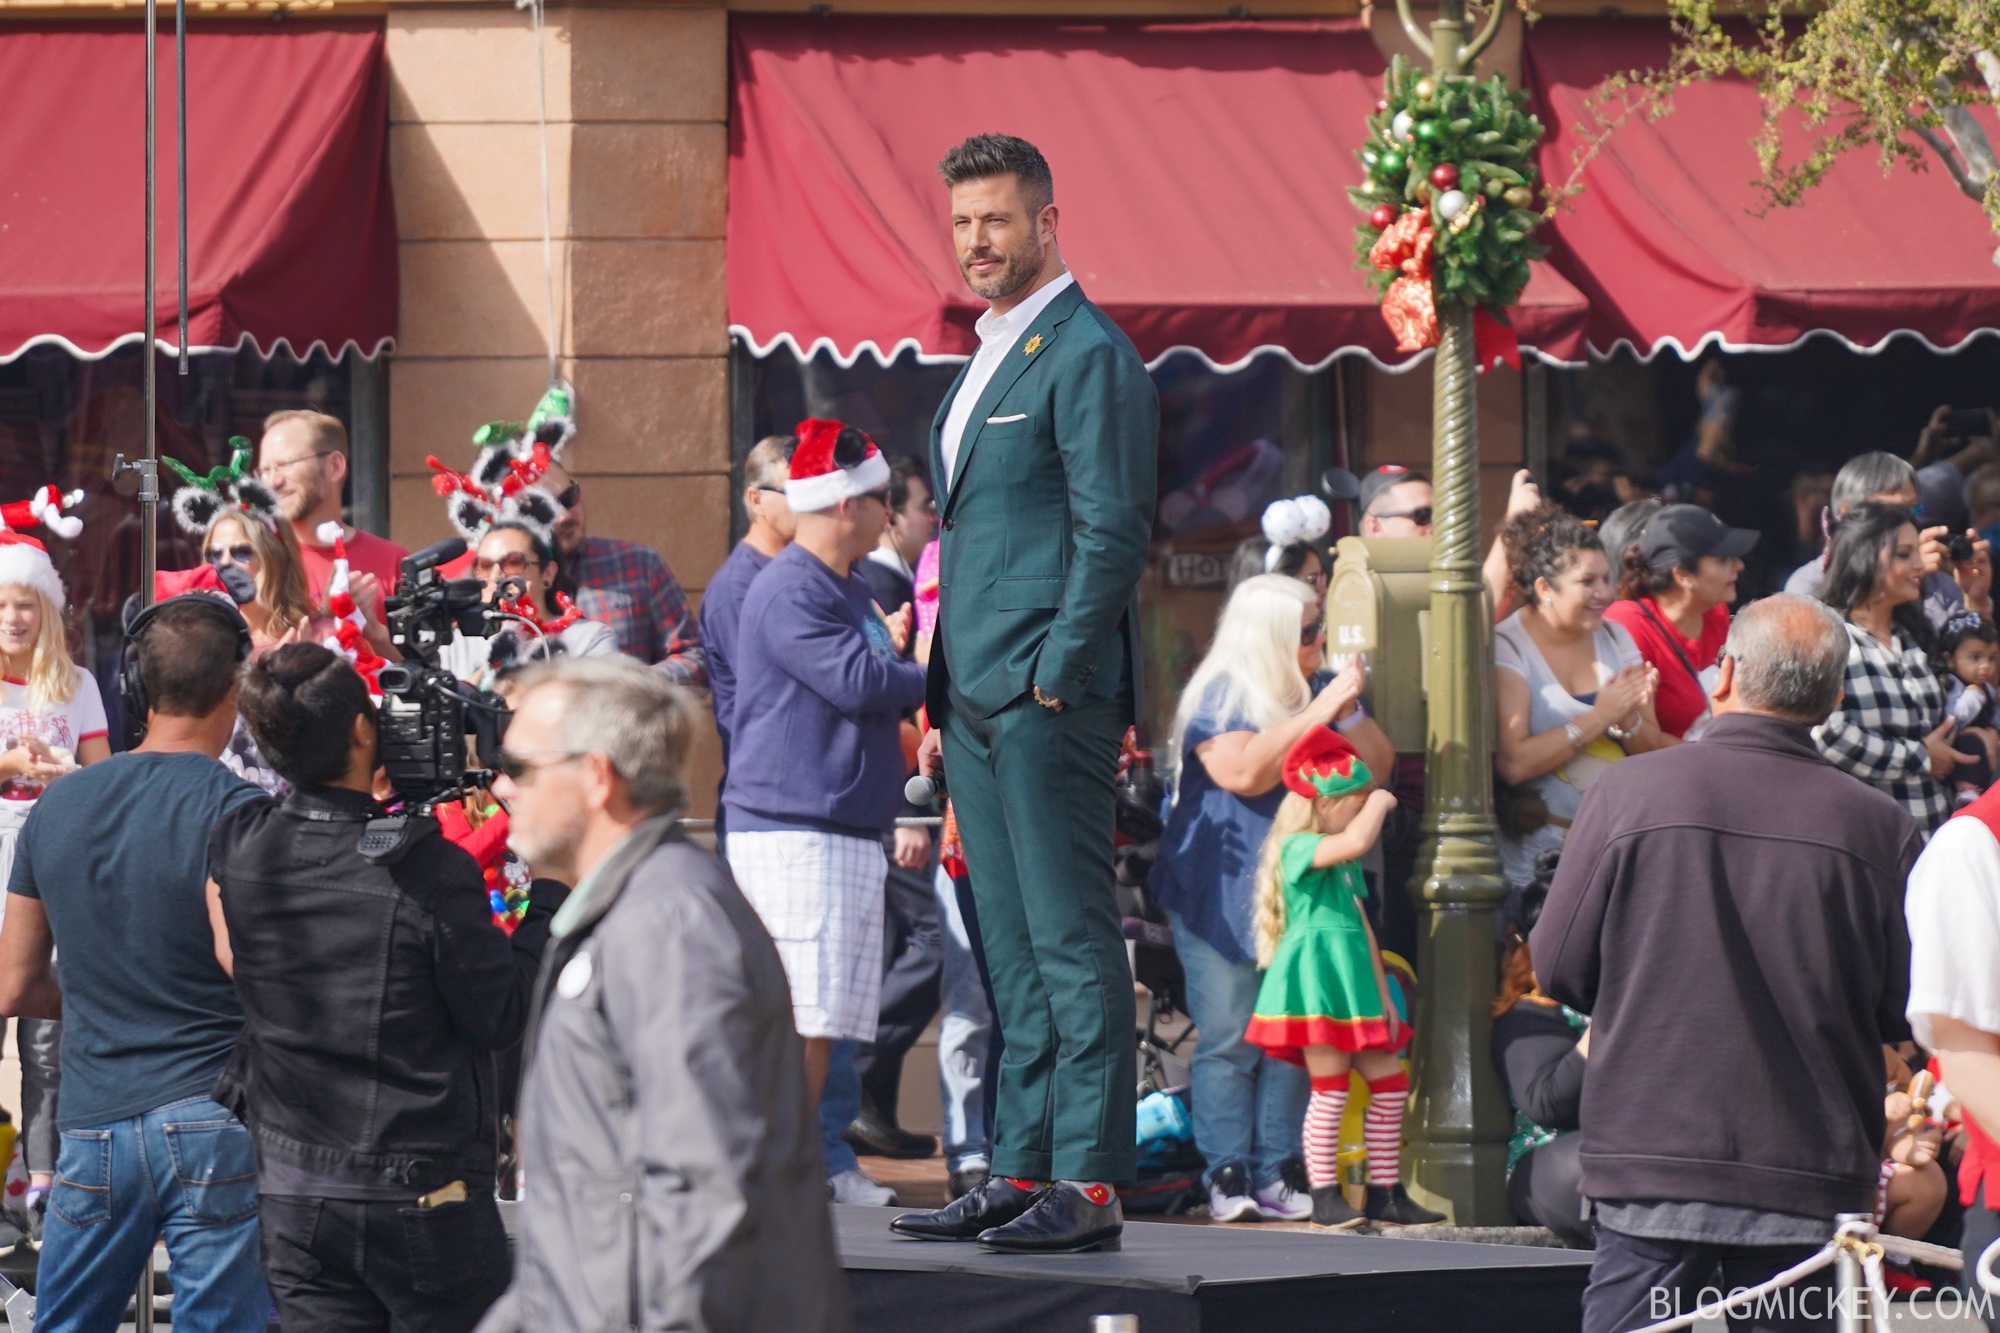 Disney Parks Holiday Special Parade Taping Underway at Disneyland